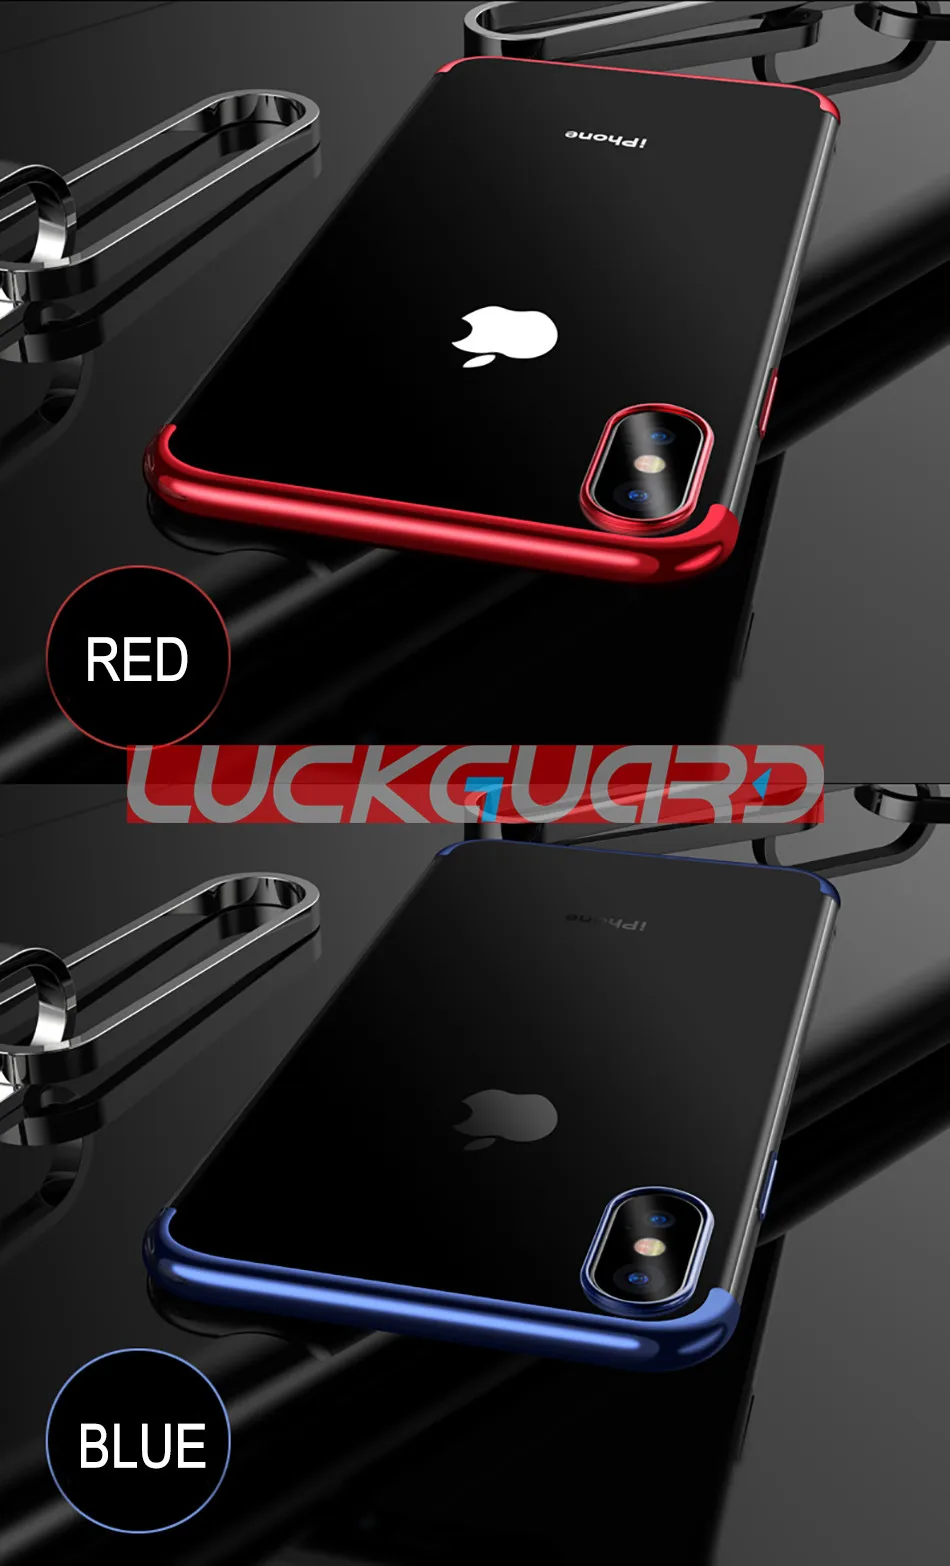 LuckGuard покрытие кремния чехол для телефона для iPhone 6 6S 7 8 плюс мягкая TPU чехол для iPhone XR XS Max X 10 прозрачный Coque X S MAX